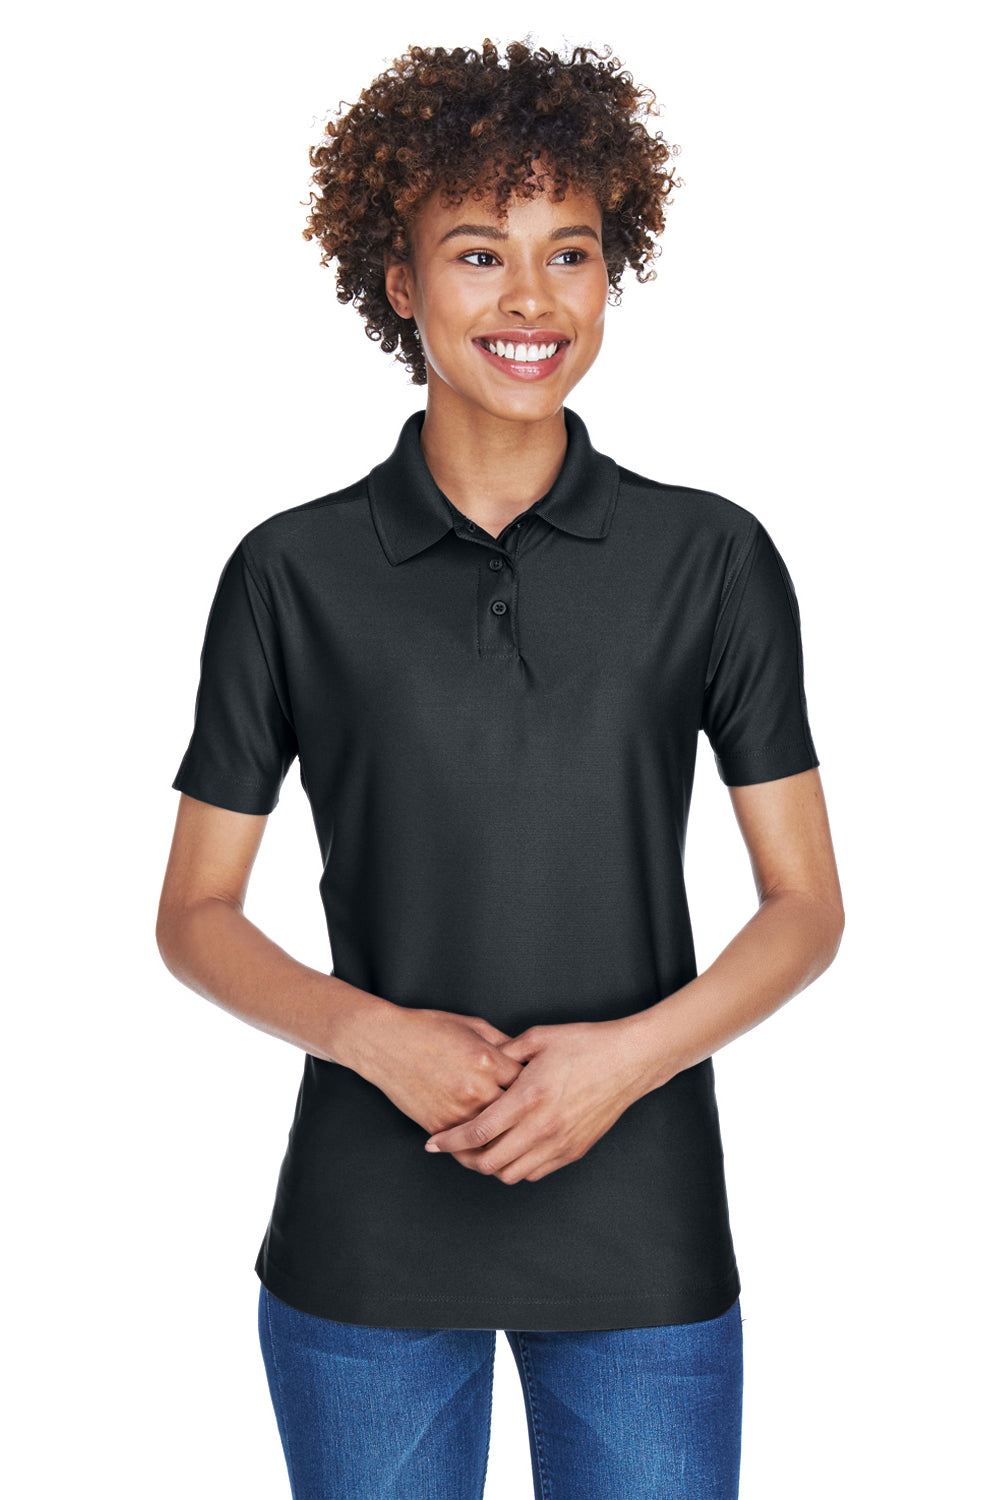 UltraClub 8414 Womens Cool & Dry Elite Performance Moisture Wicking Short Sleeve Polo Shirt Black Front